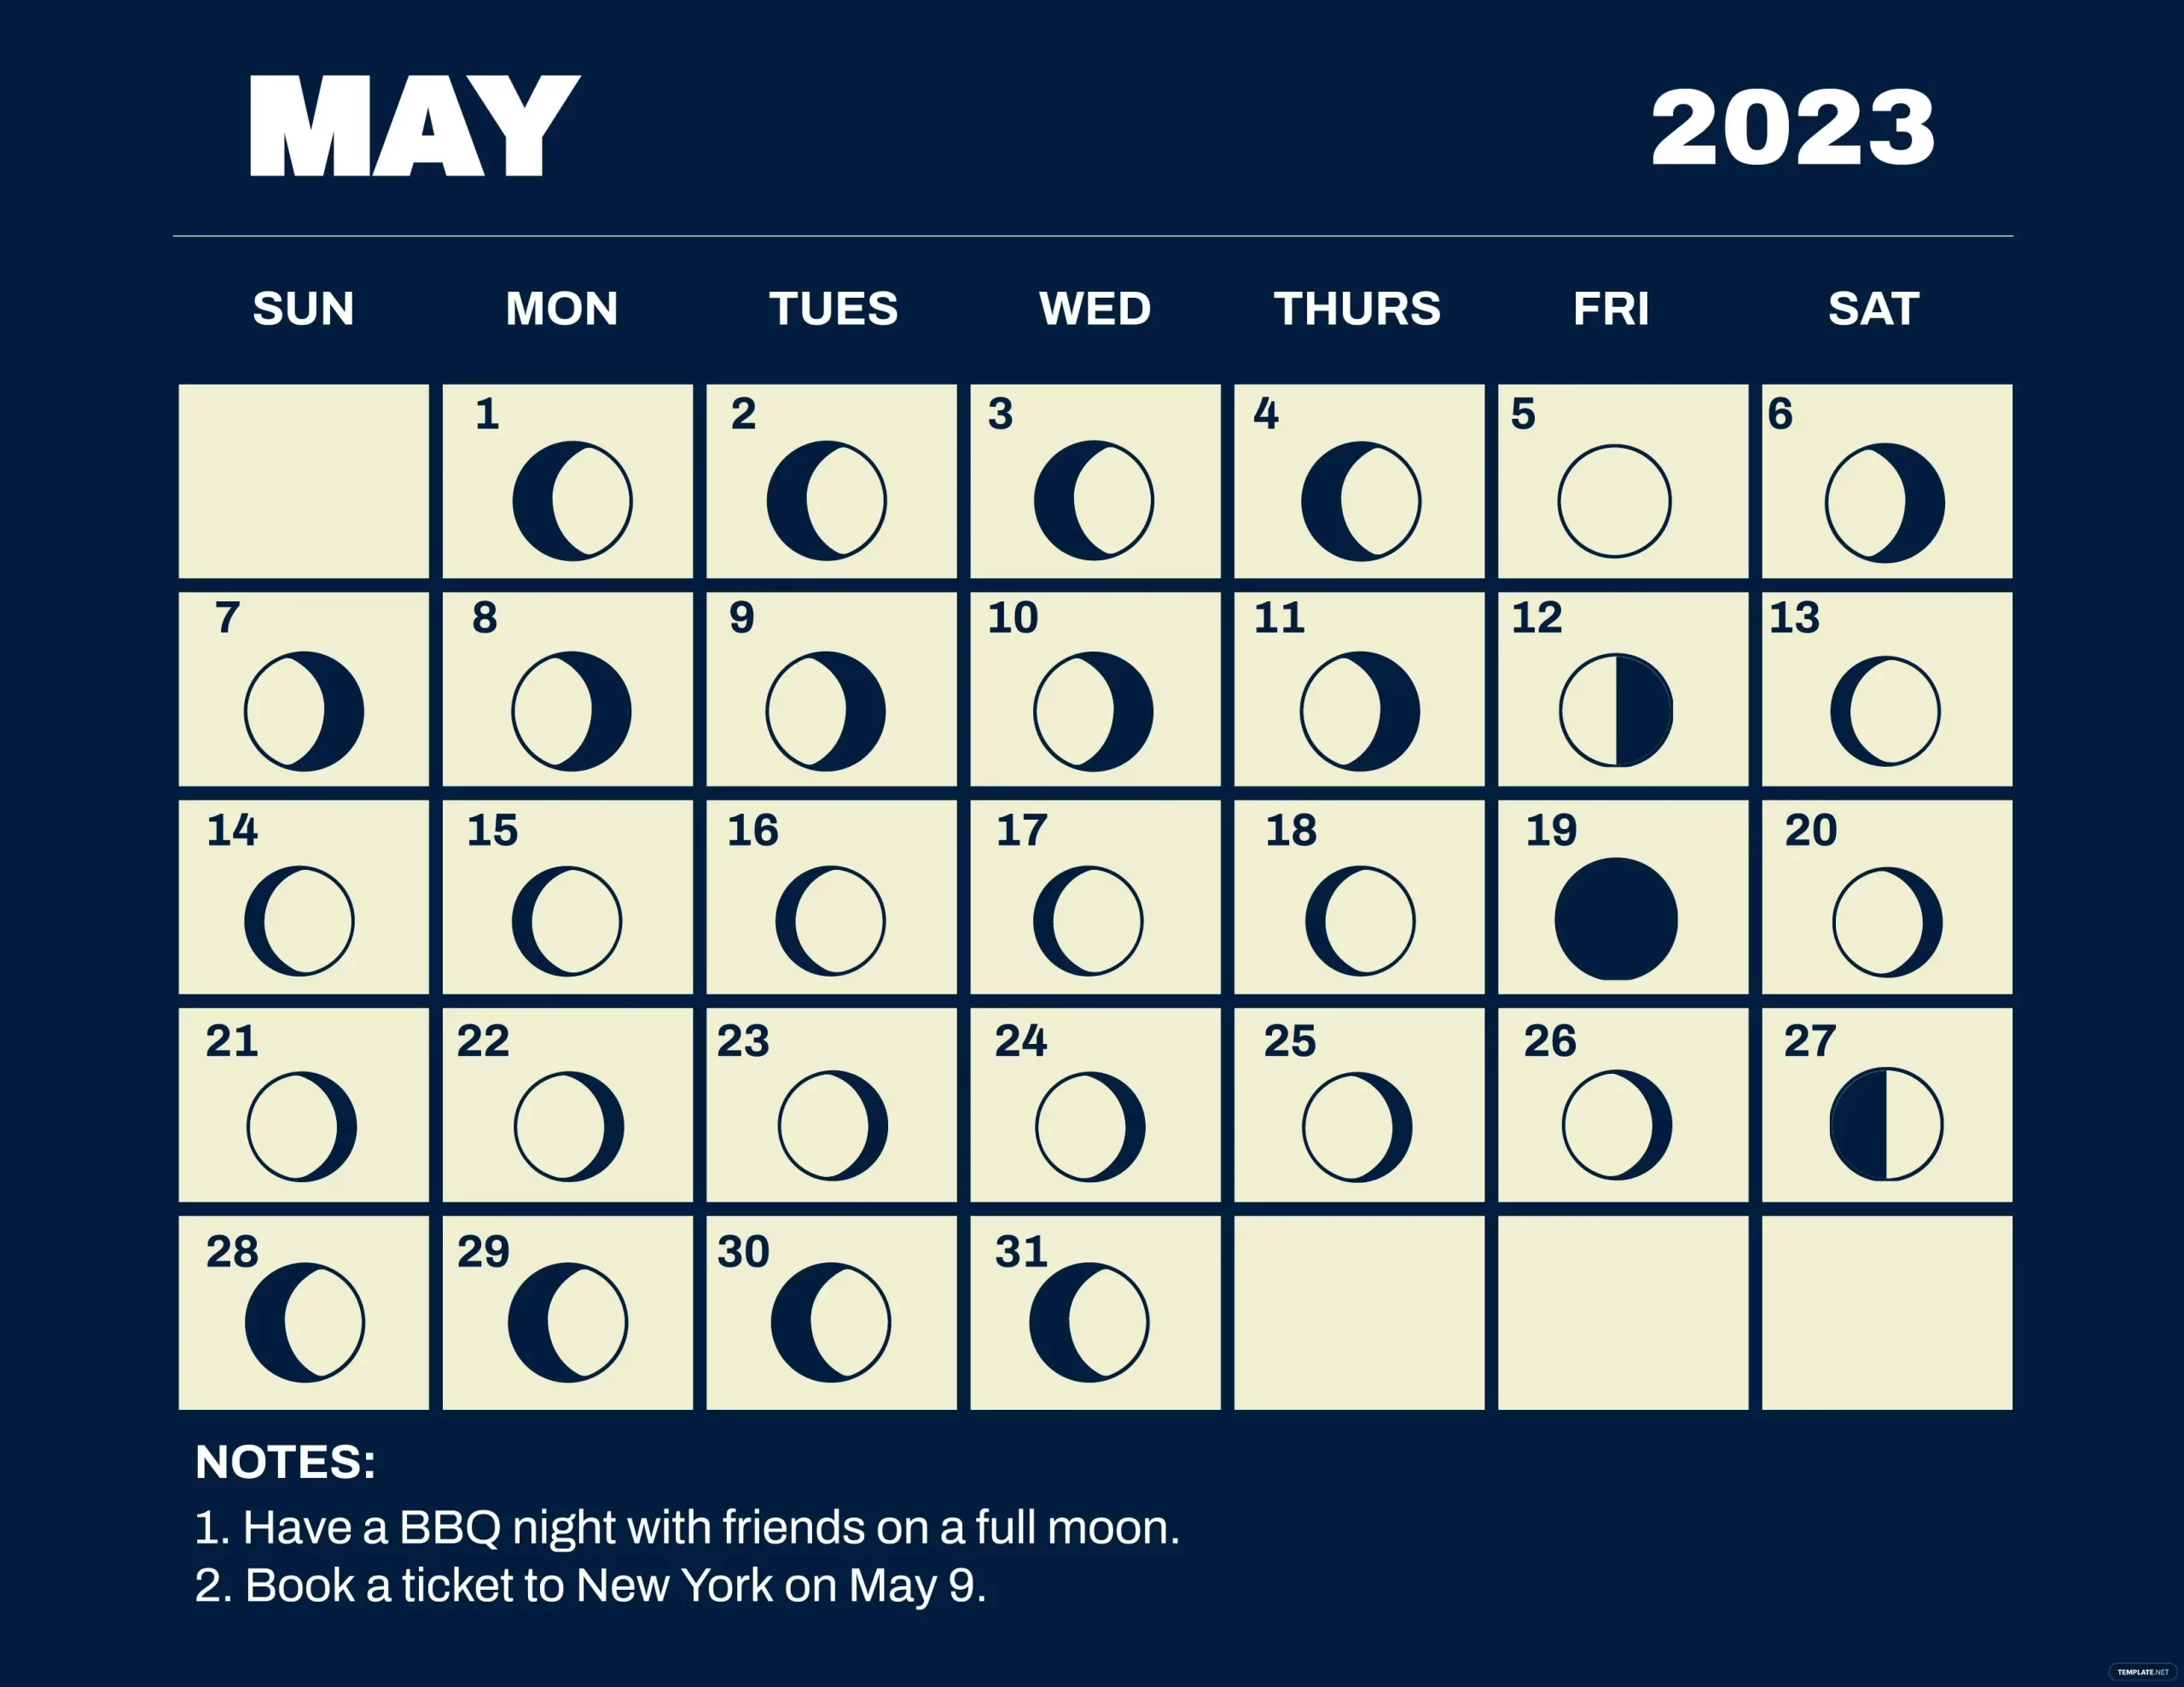 May 2023 New Moon Dates